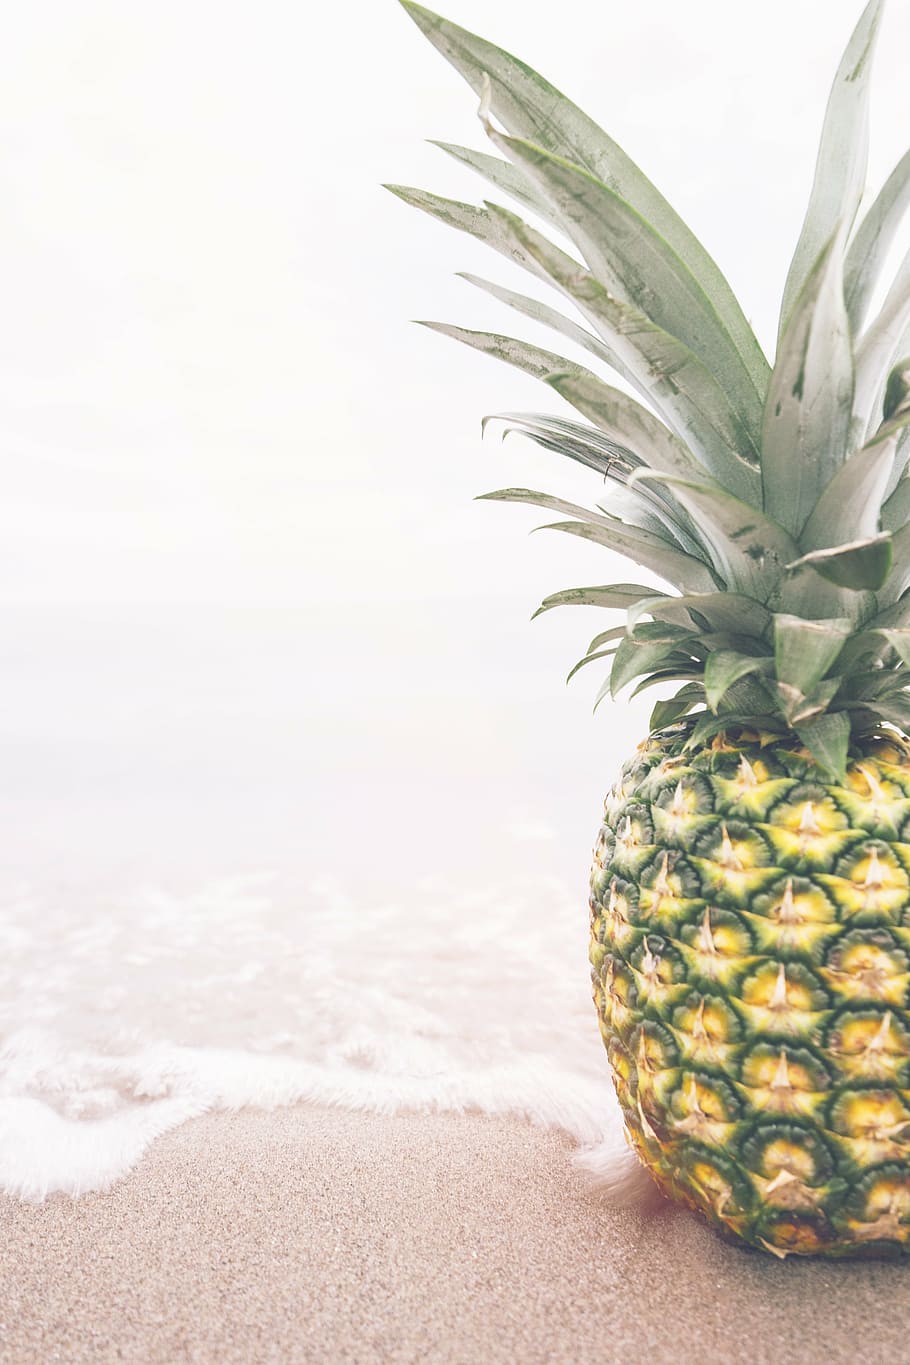 pineapple on shore, pineapple, dessert, appetizer, fruit, juice, crop, beach, ocean, sea